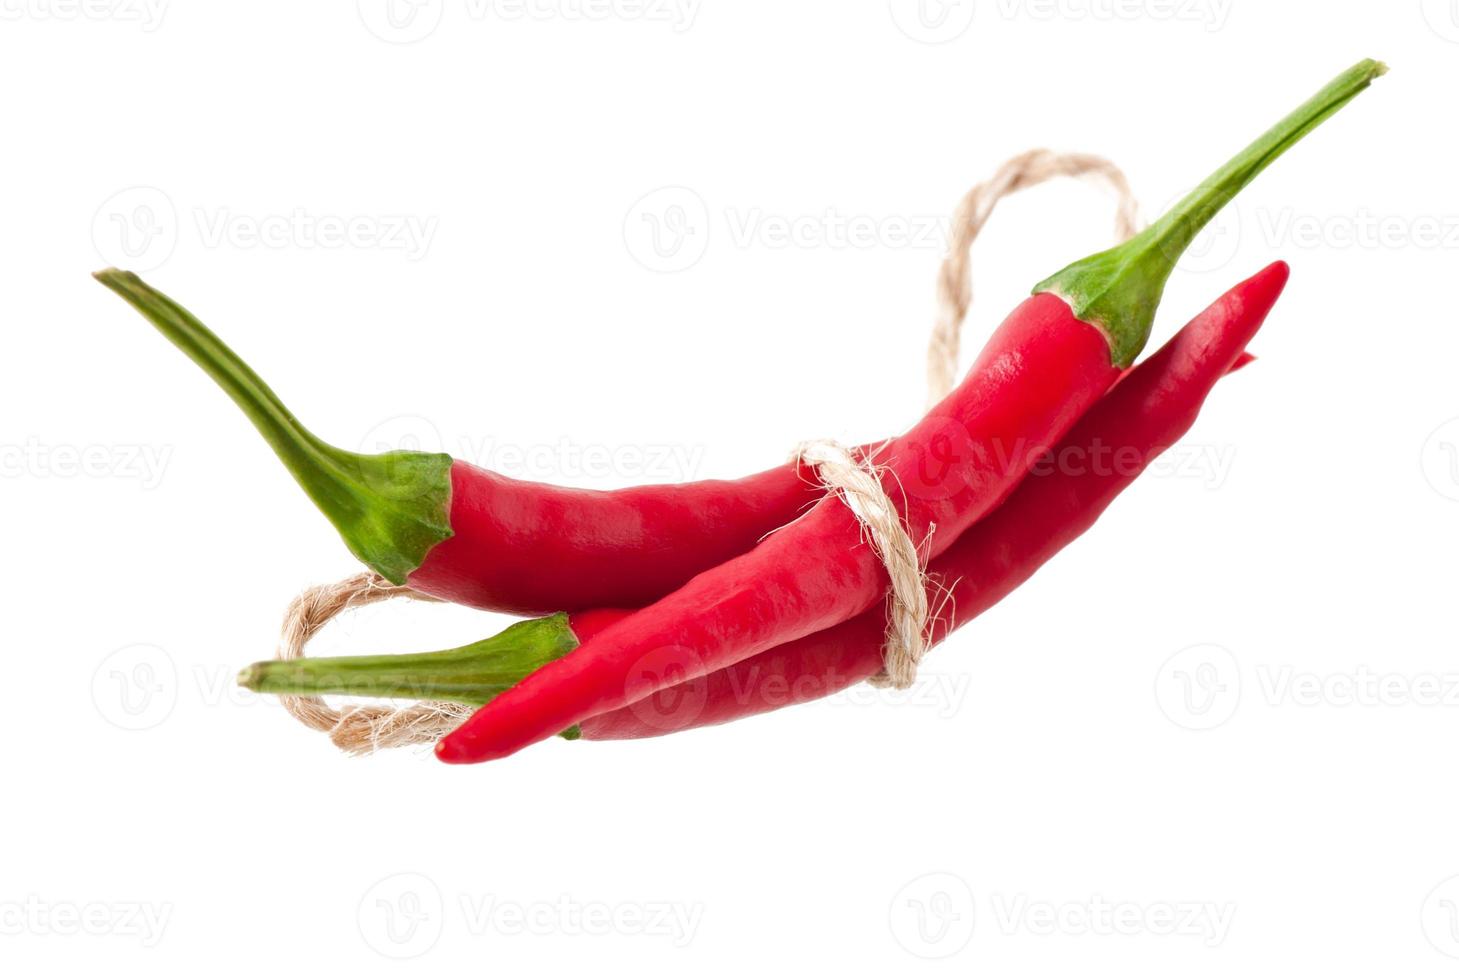 red hot chili peppers amarrado com corda isolada no fundo branco foto